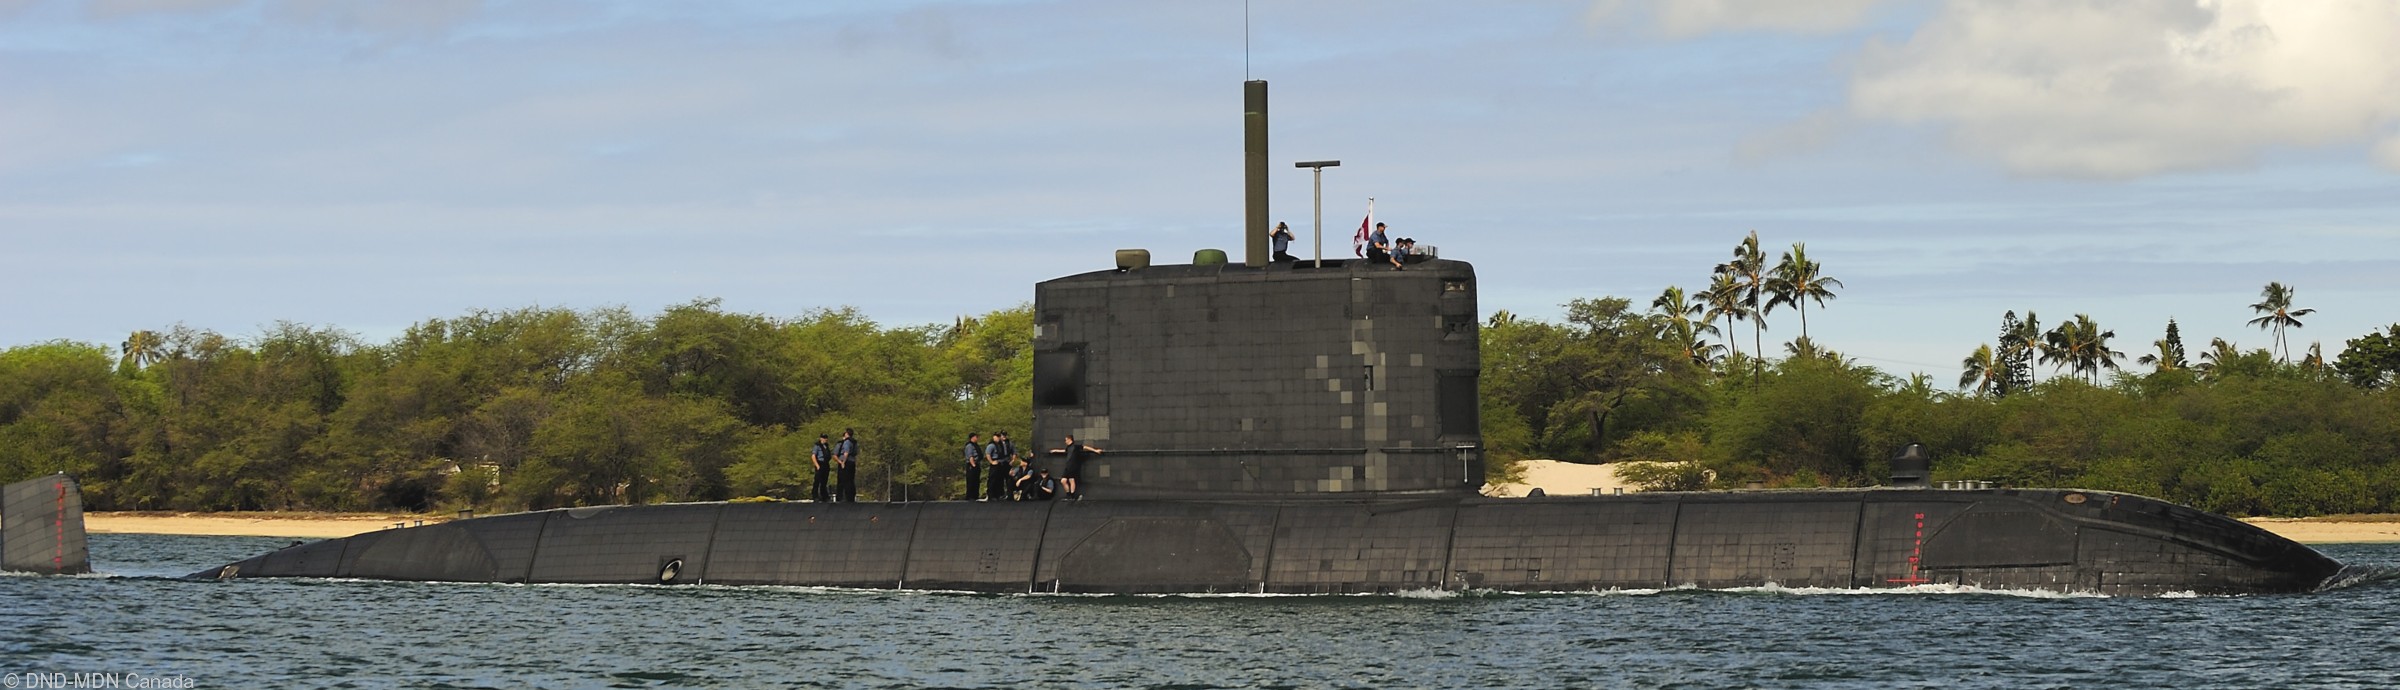 ssk-876 hmcs victoria upholder class attack submarine hunter killer ncsm royal canadian navy 36